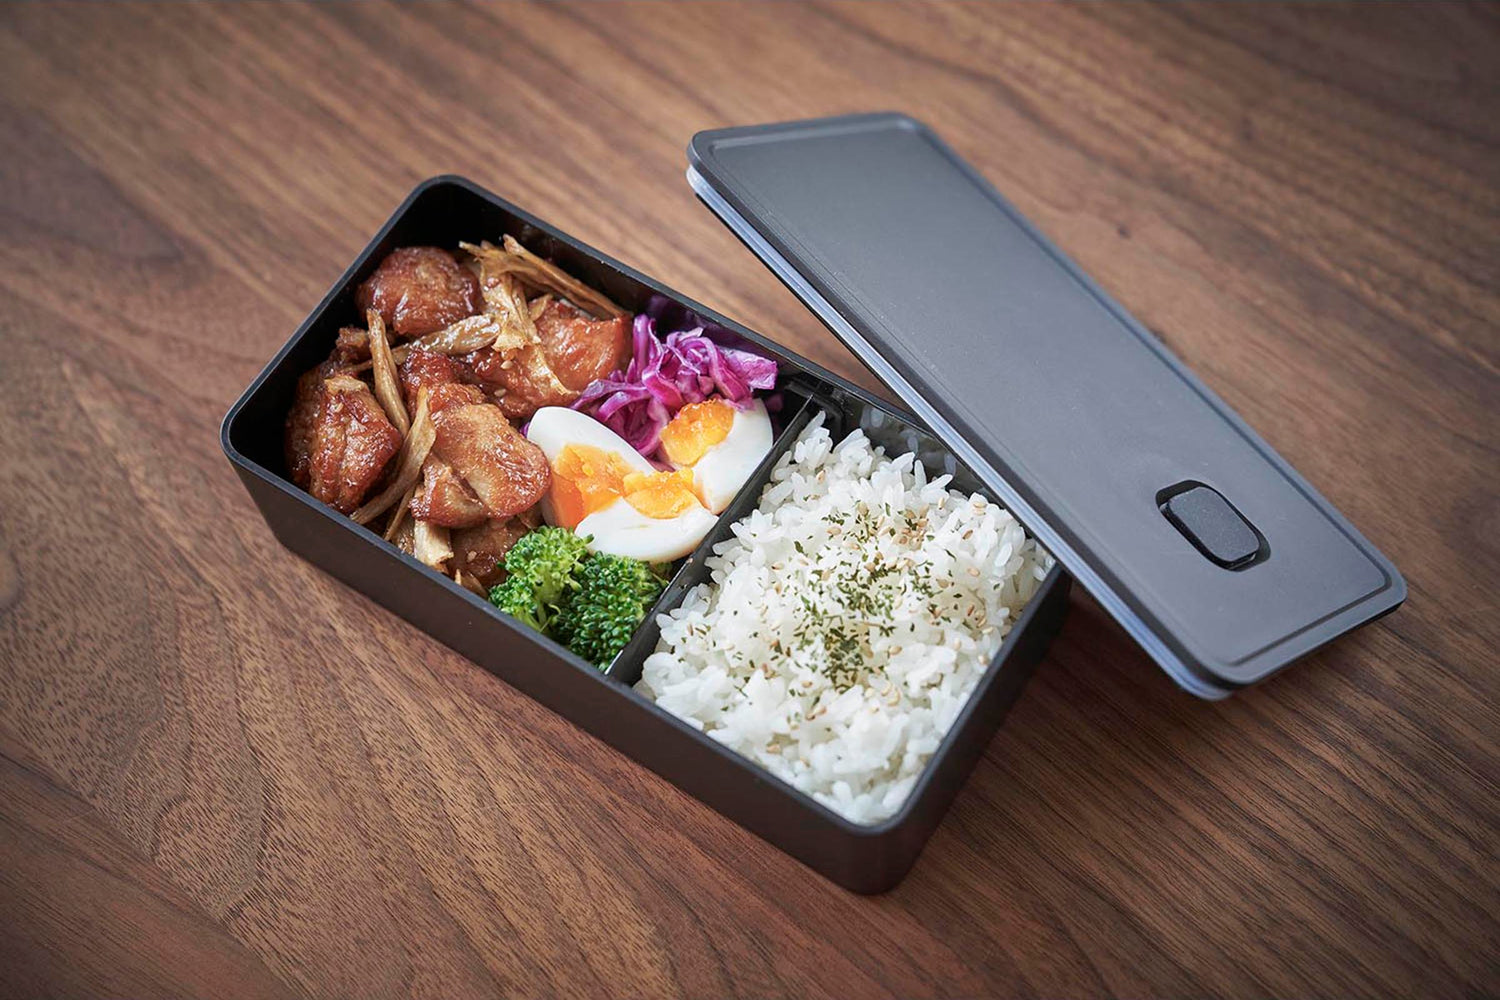 View 23 - Black Vacuum-Sealing Bento Box holding lunch food by Yamazaki Home.